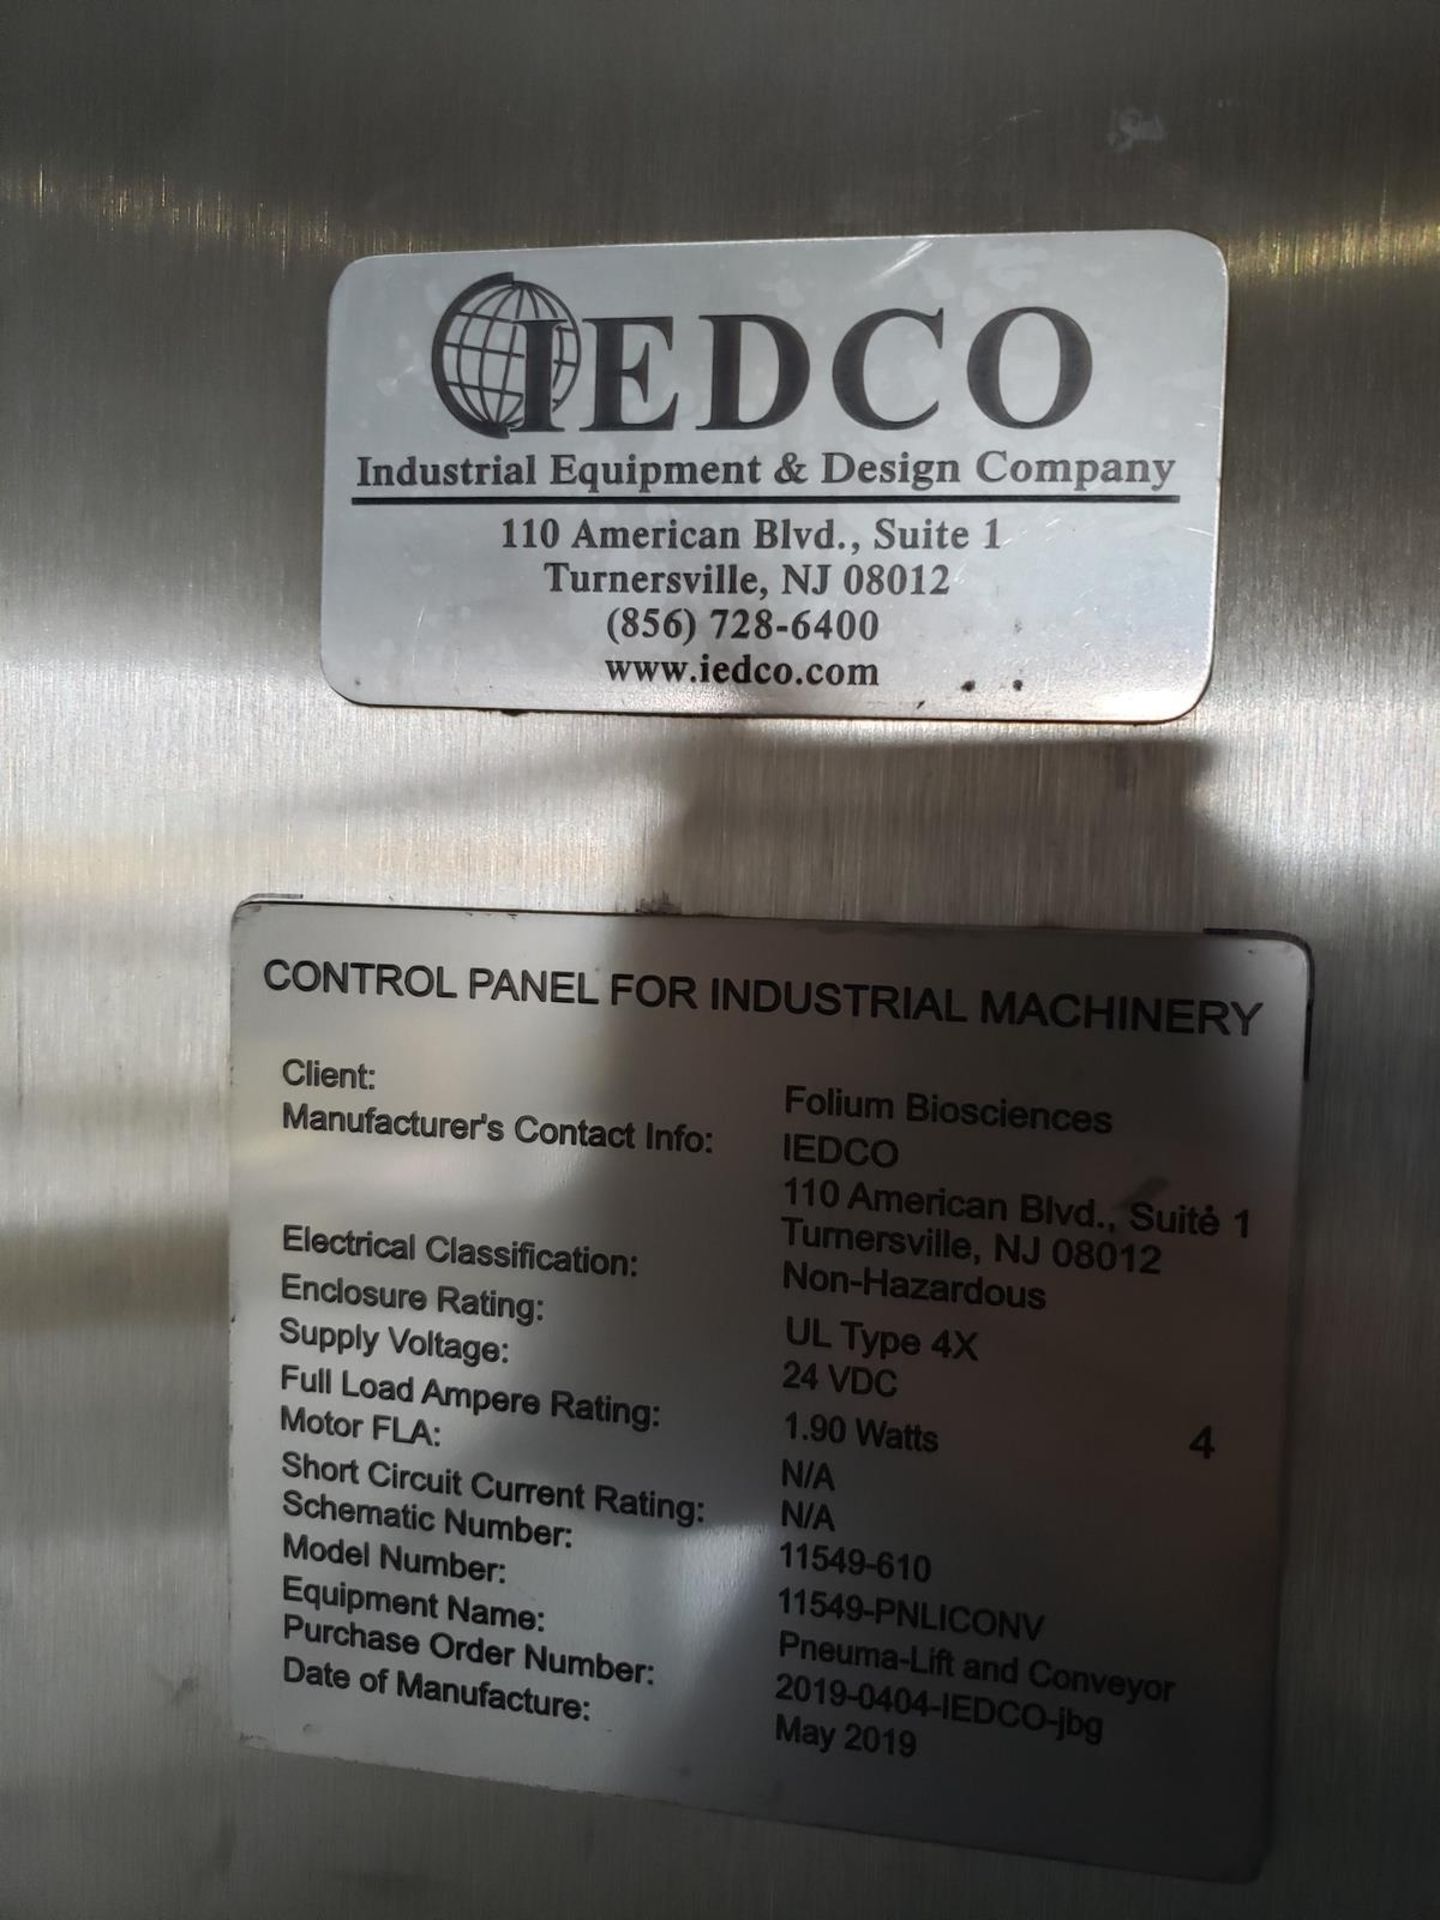 IEDCO Filtration Media Packer, M# 11549-610, W/ Pneuma-Lift, Conveyor, Super Sack U | Rig Fee $1750 - Image 2 of 10